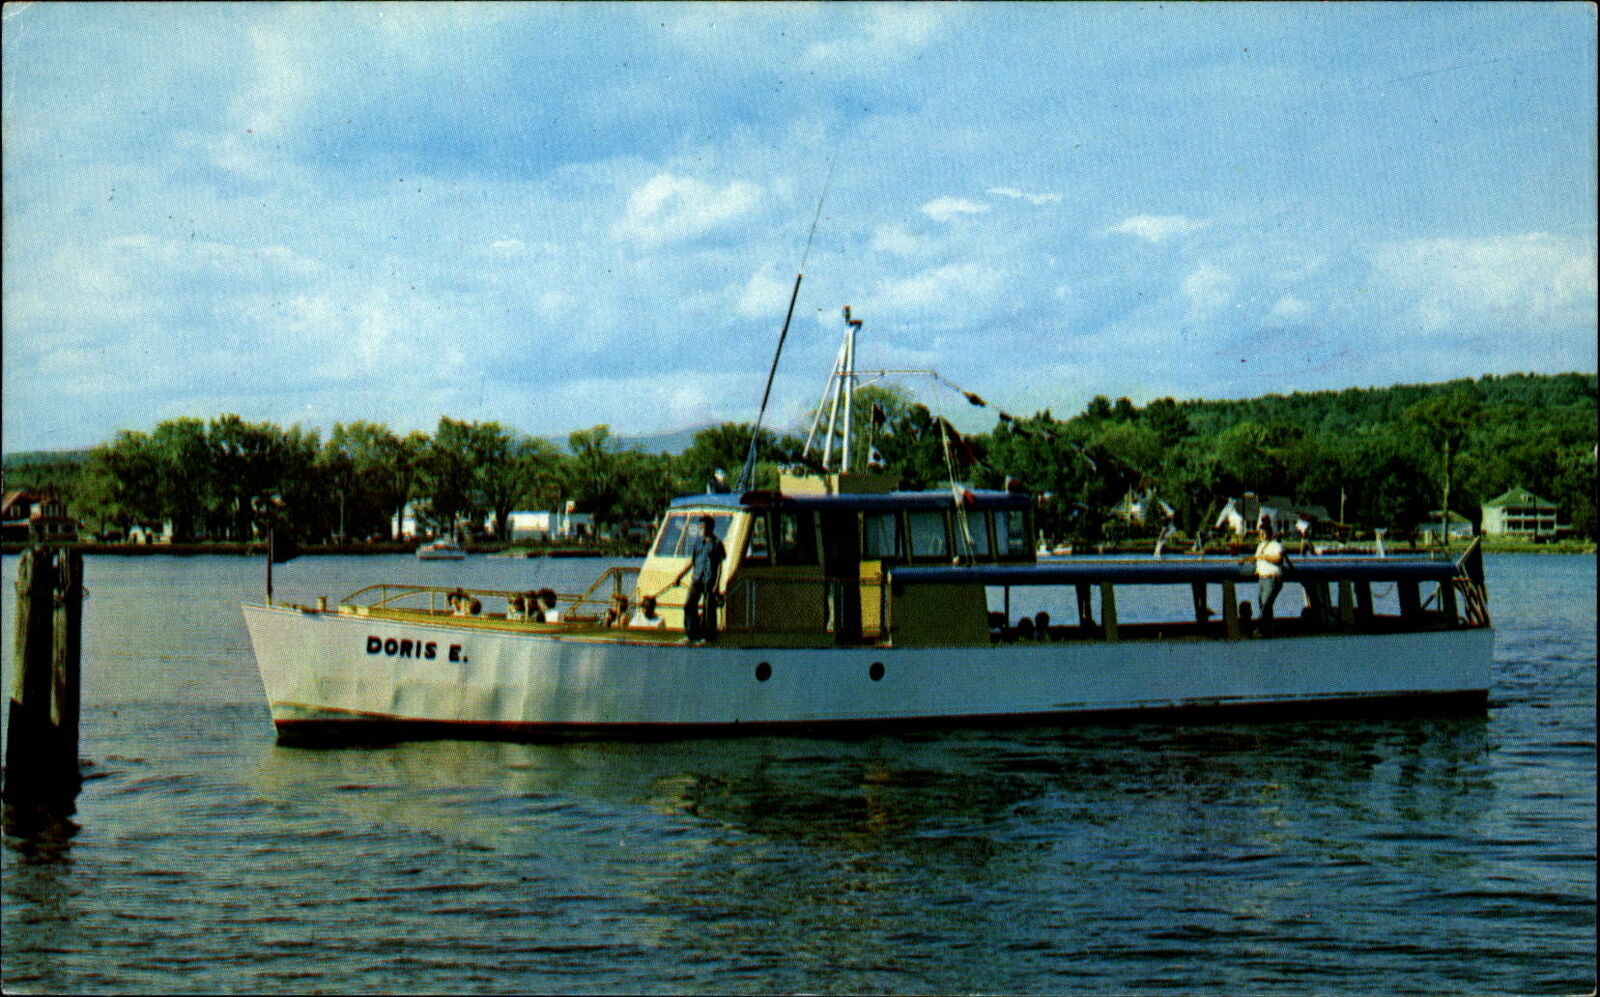 Doris E. excursion tour boat ~ Meredith NH New Hampshire